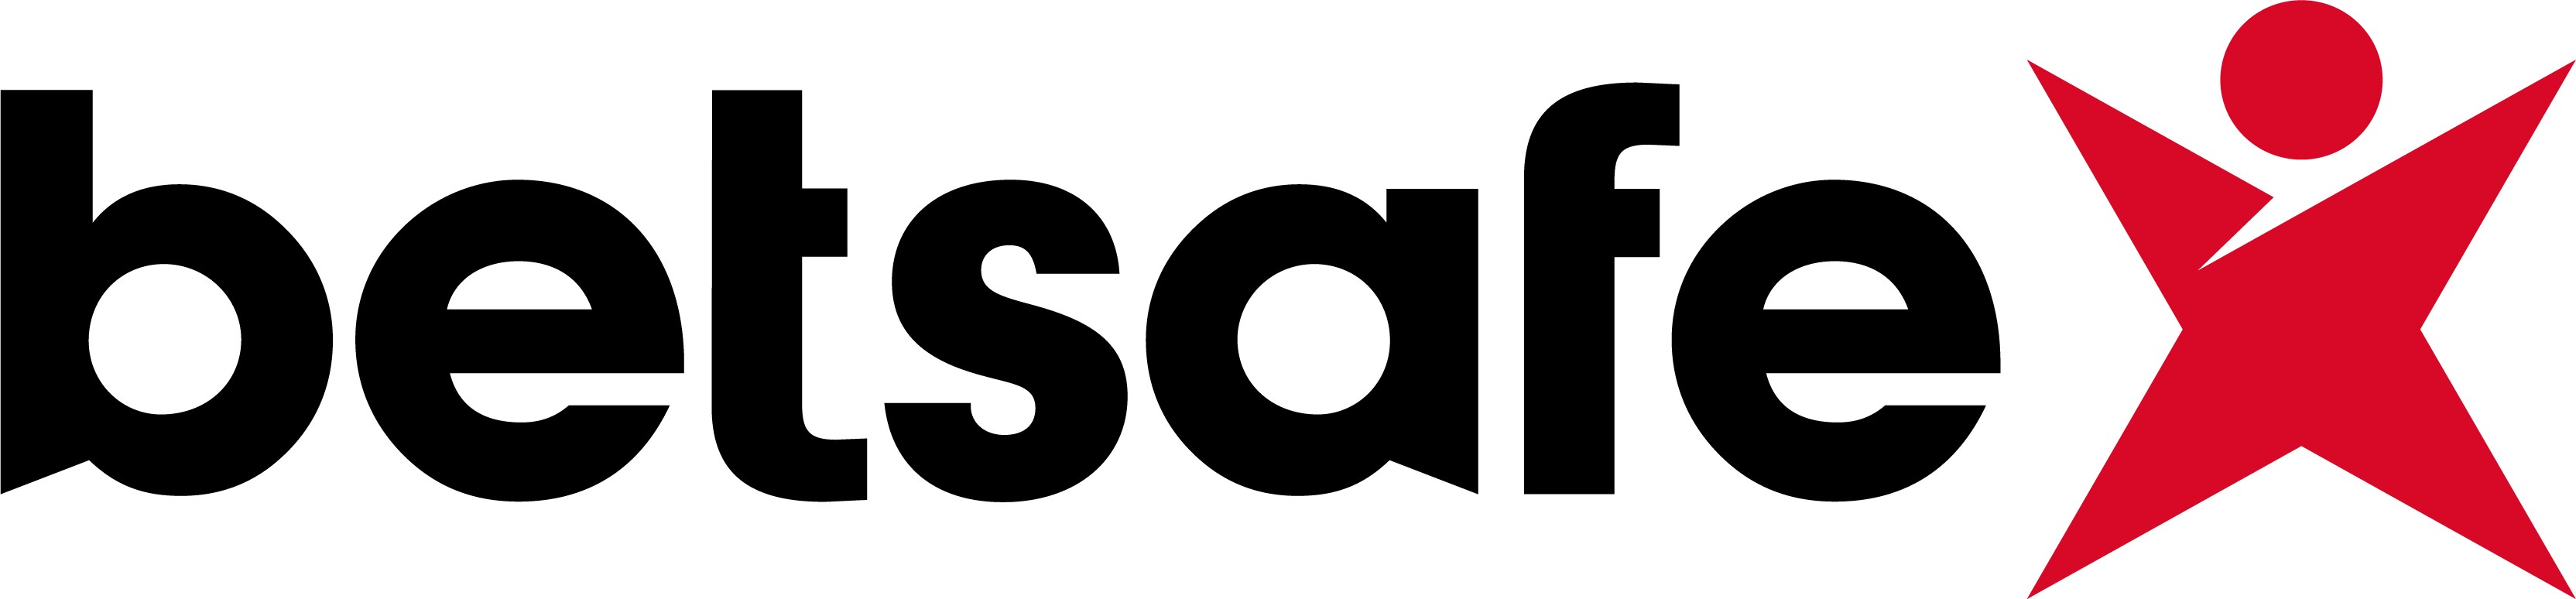 Betsafes logga